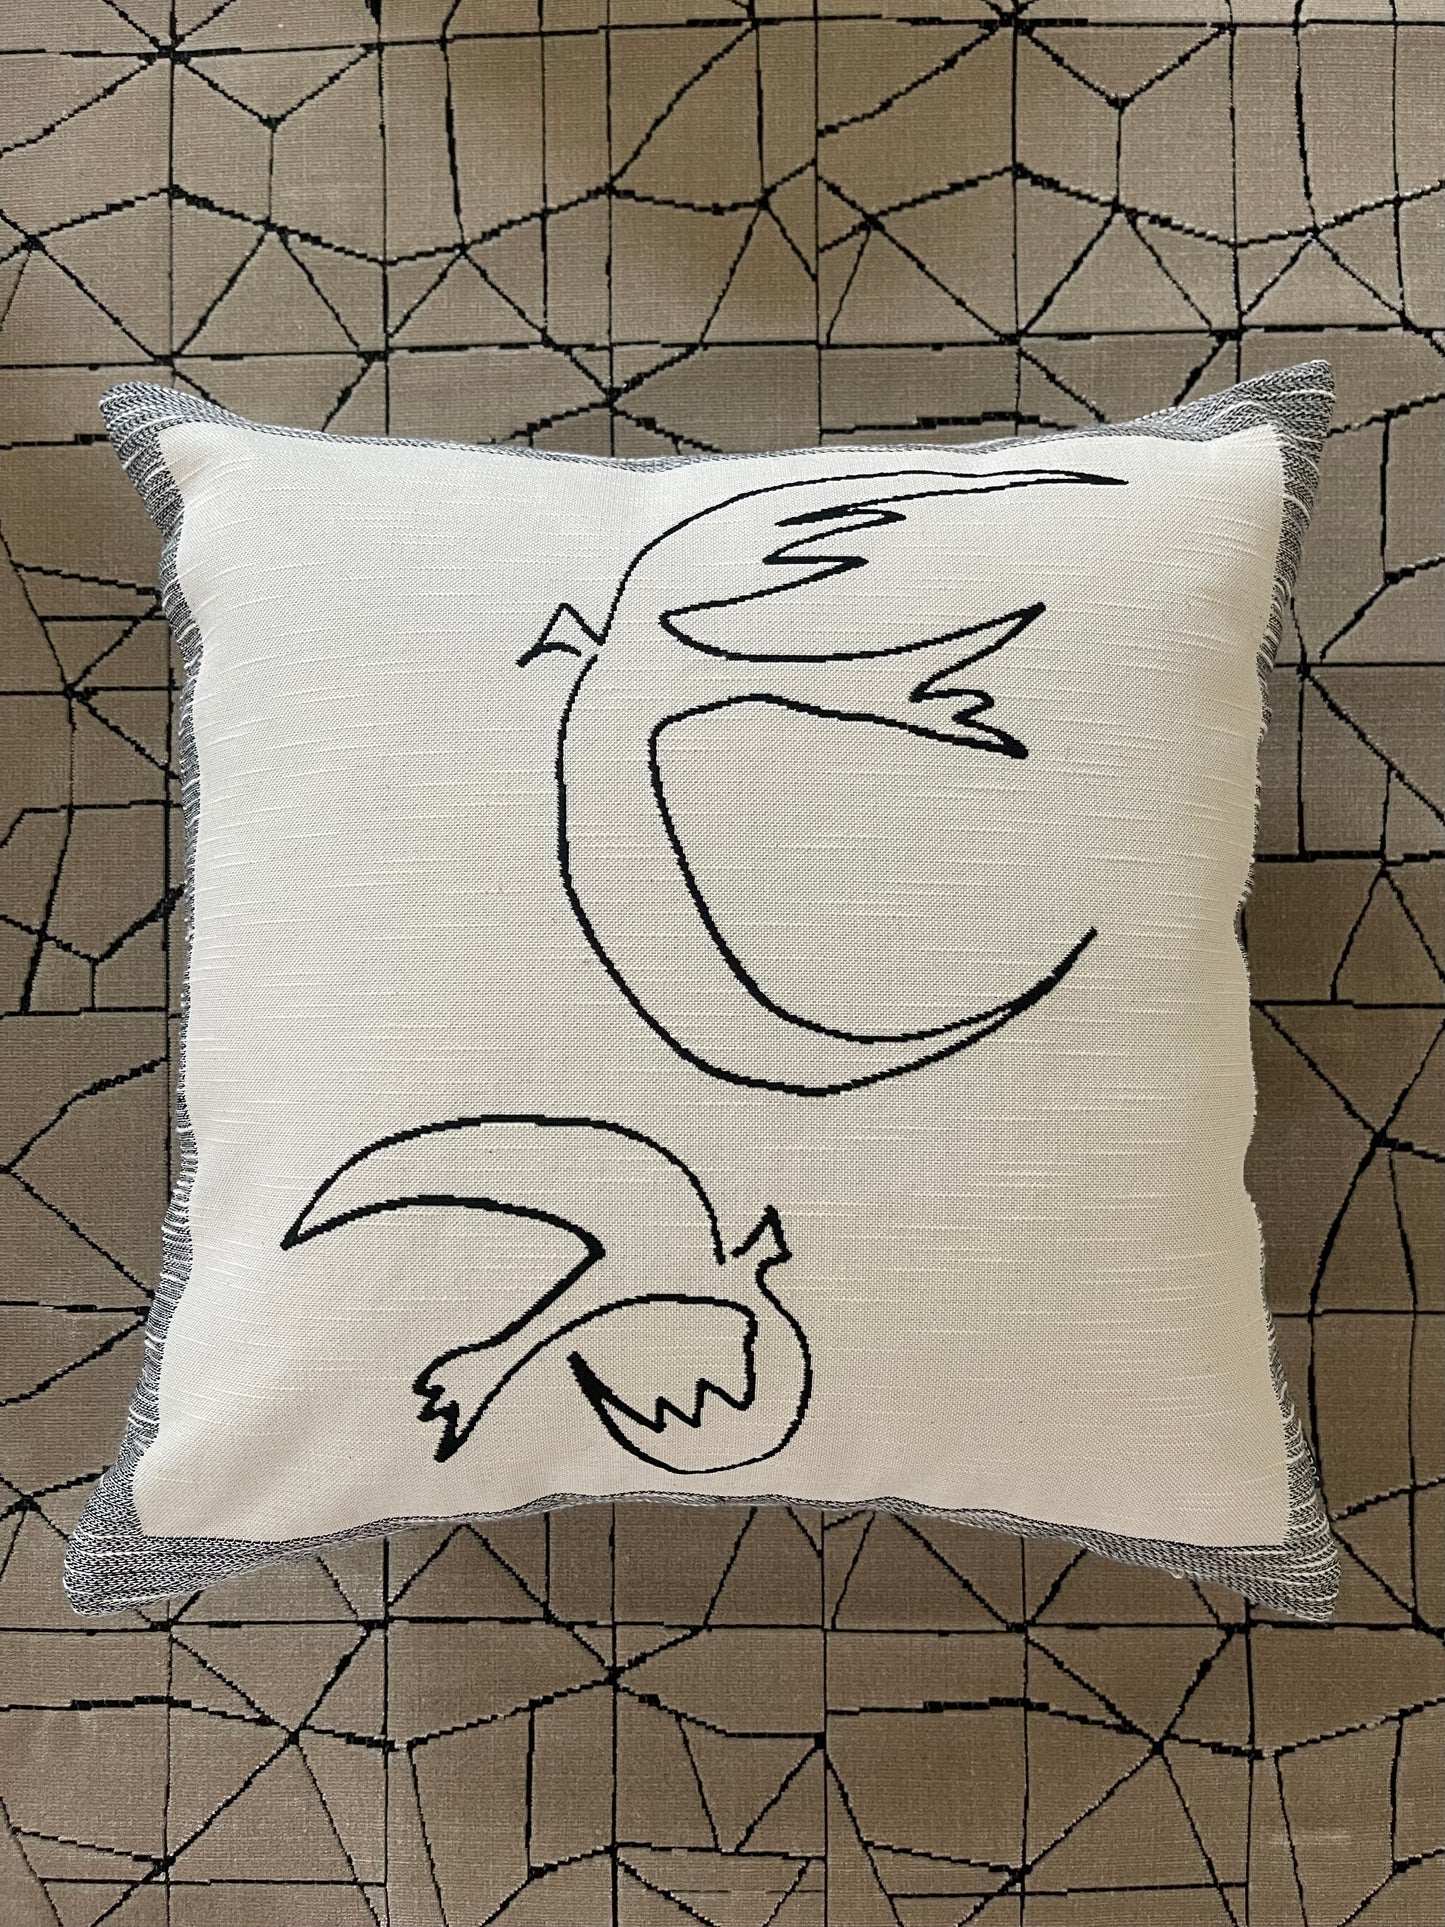 Birds cushion